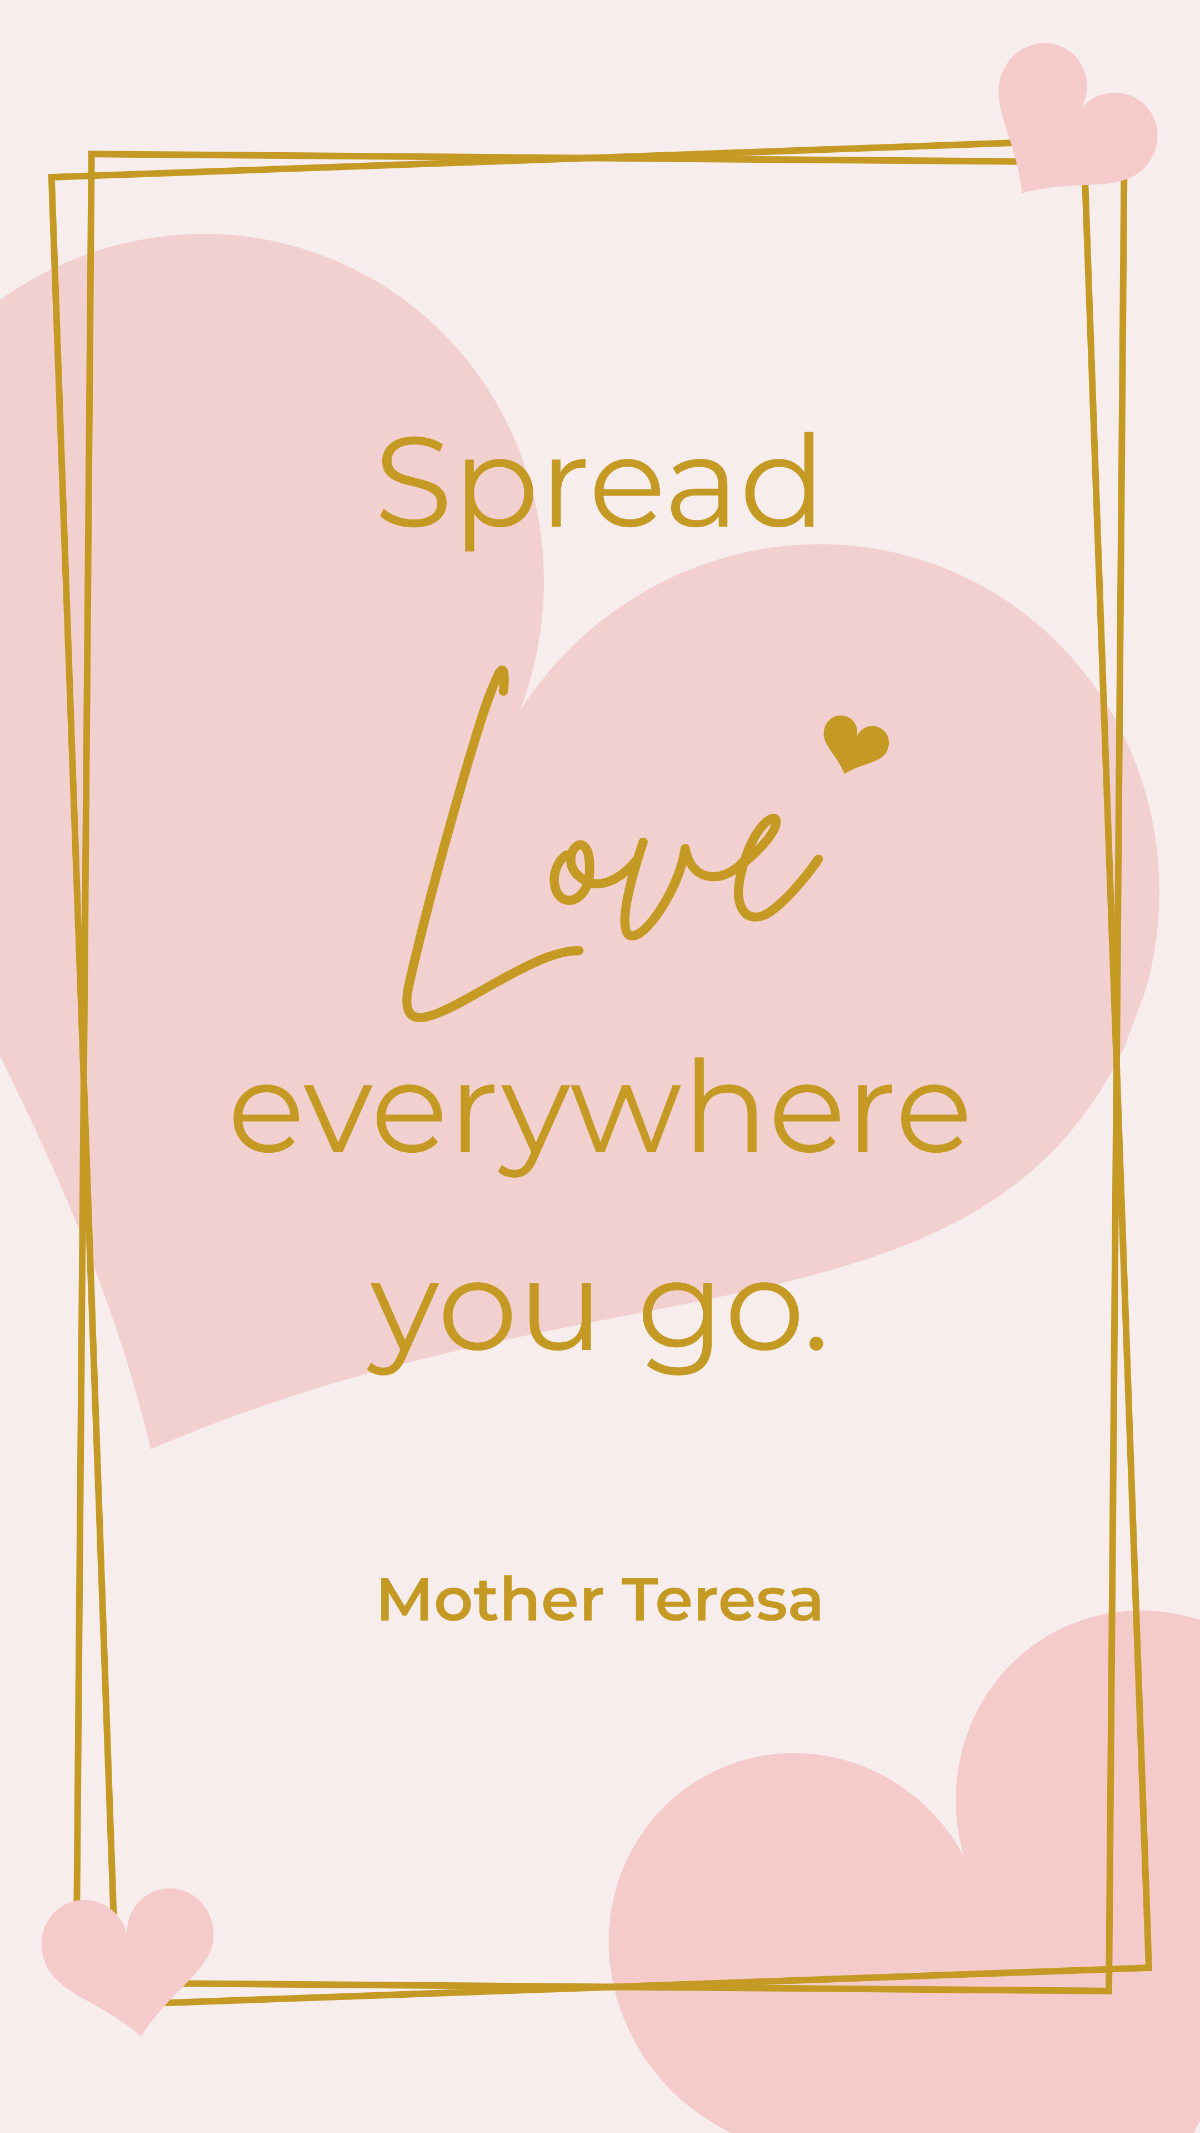 Mother Teresa - Spread love everywhere you go. Template